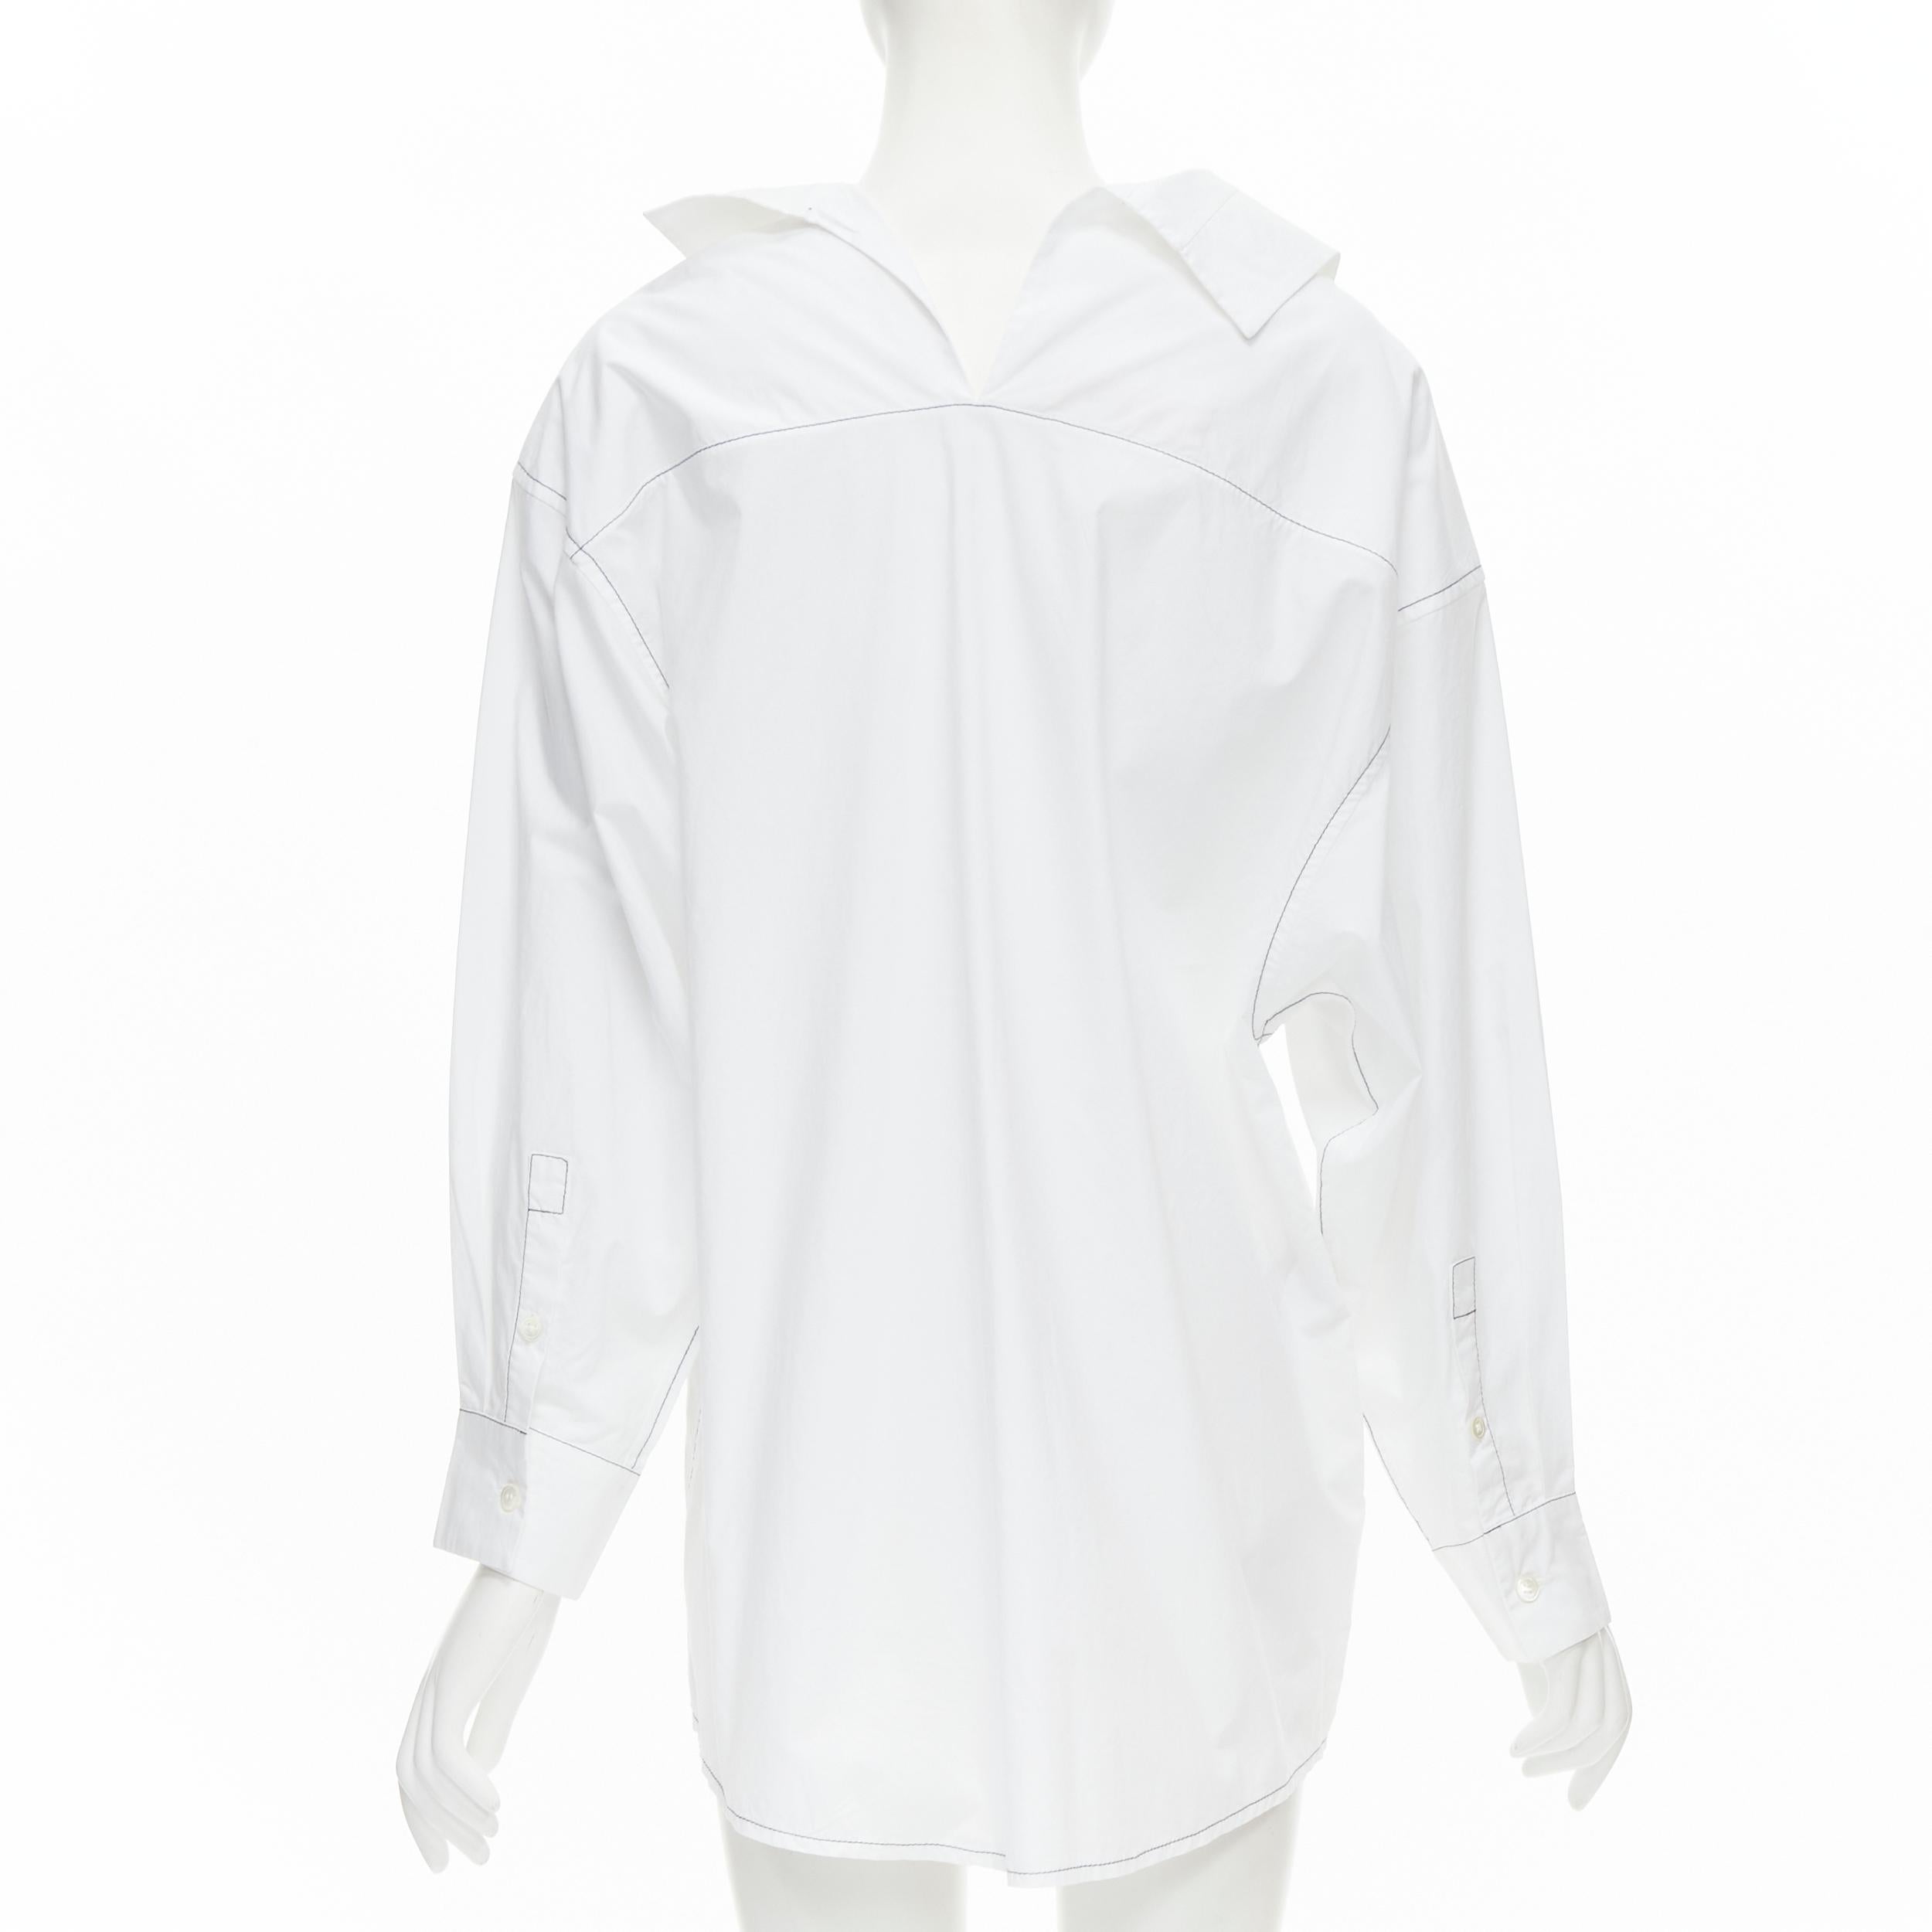 deconstructed white shirt